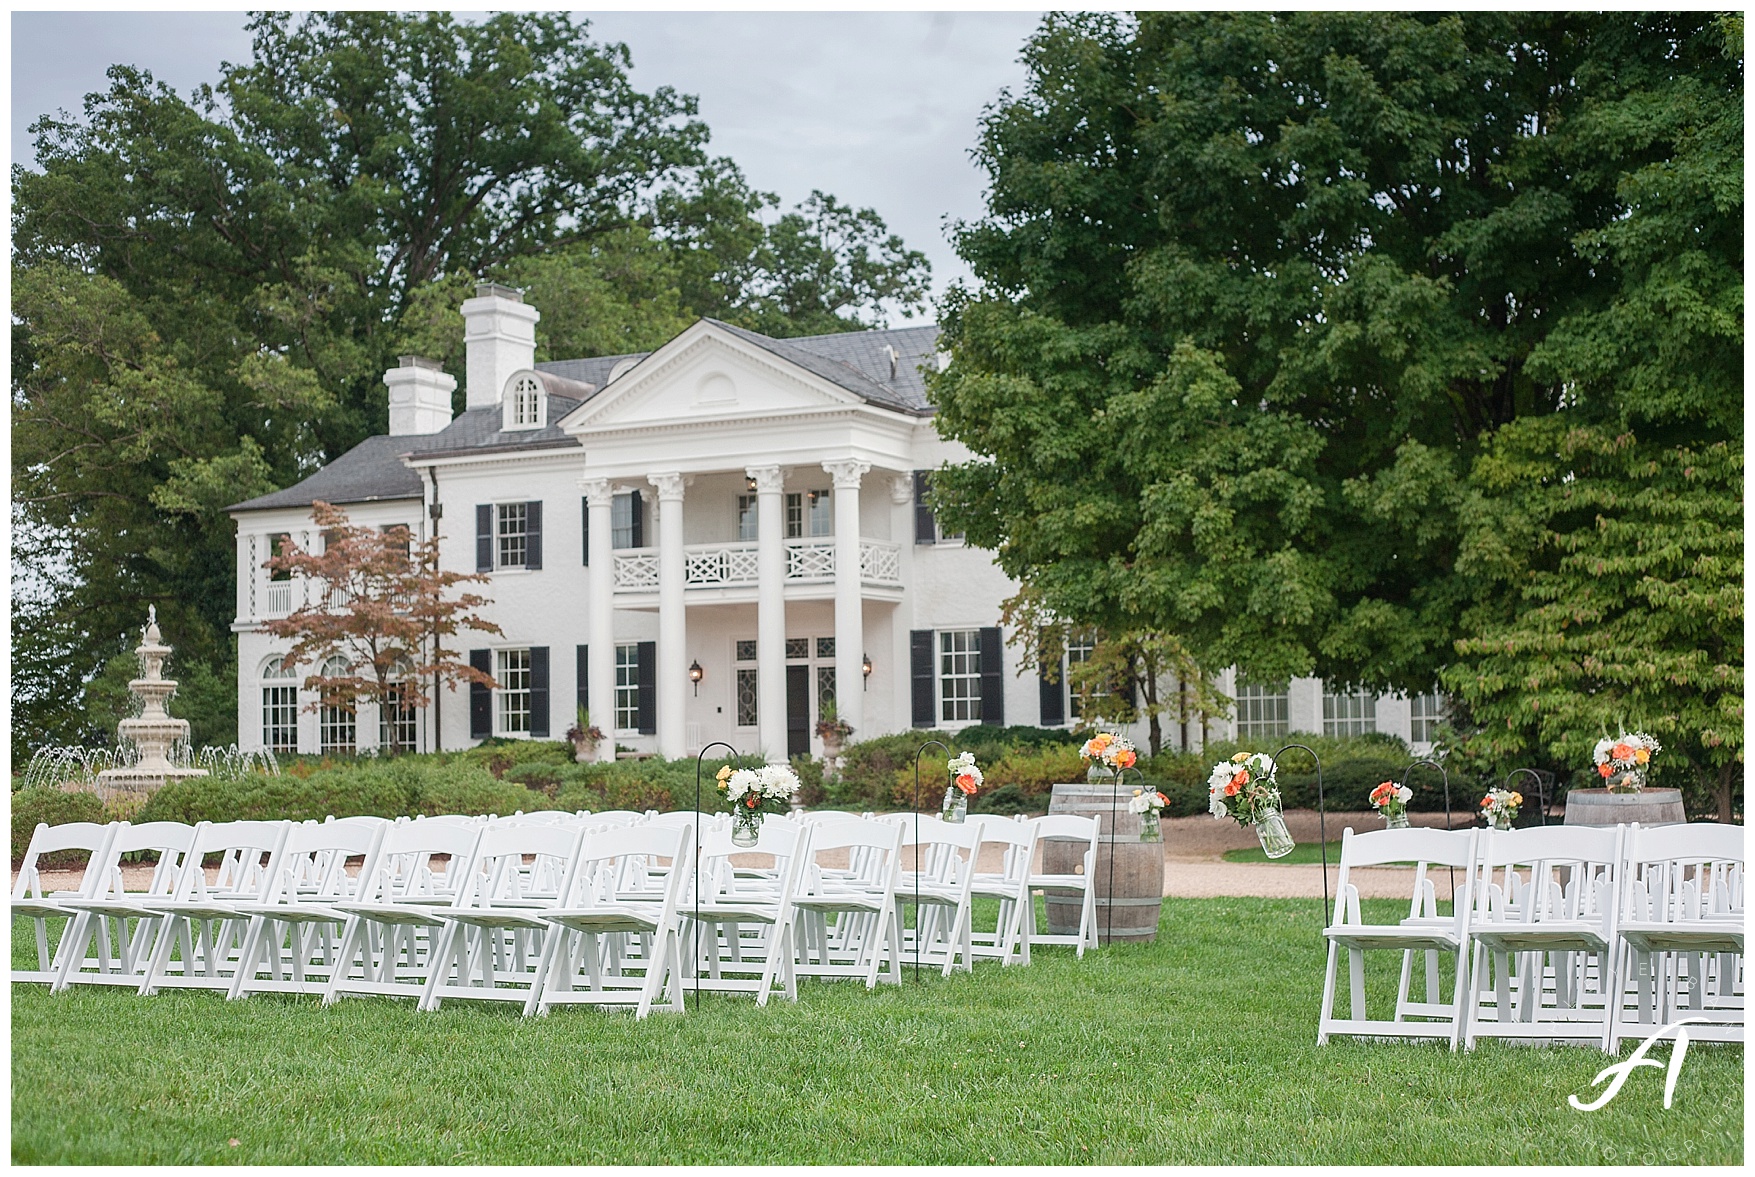 Keswick Vineyard Wedding Photographer || Charlottesville Winery Wedding Photographer || Central Virginia Fall Wedding || www.ashleyeiban.com